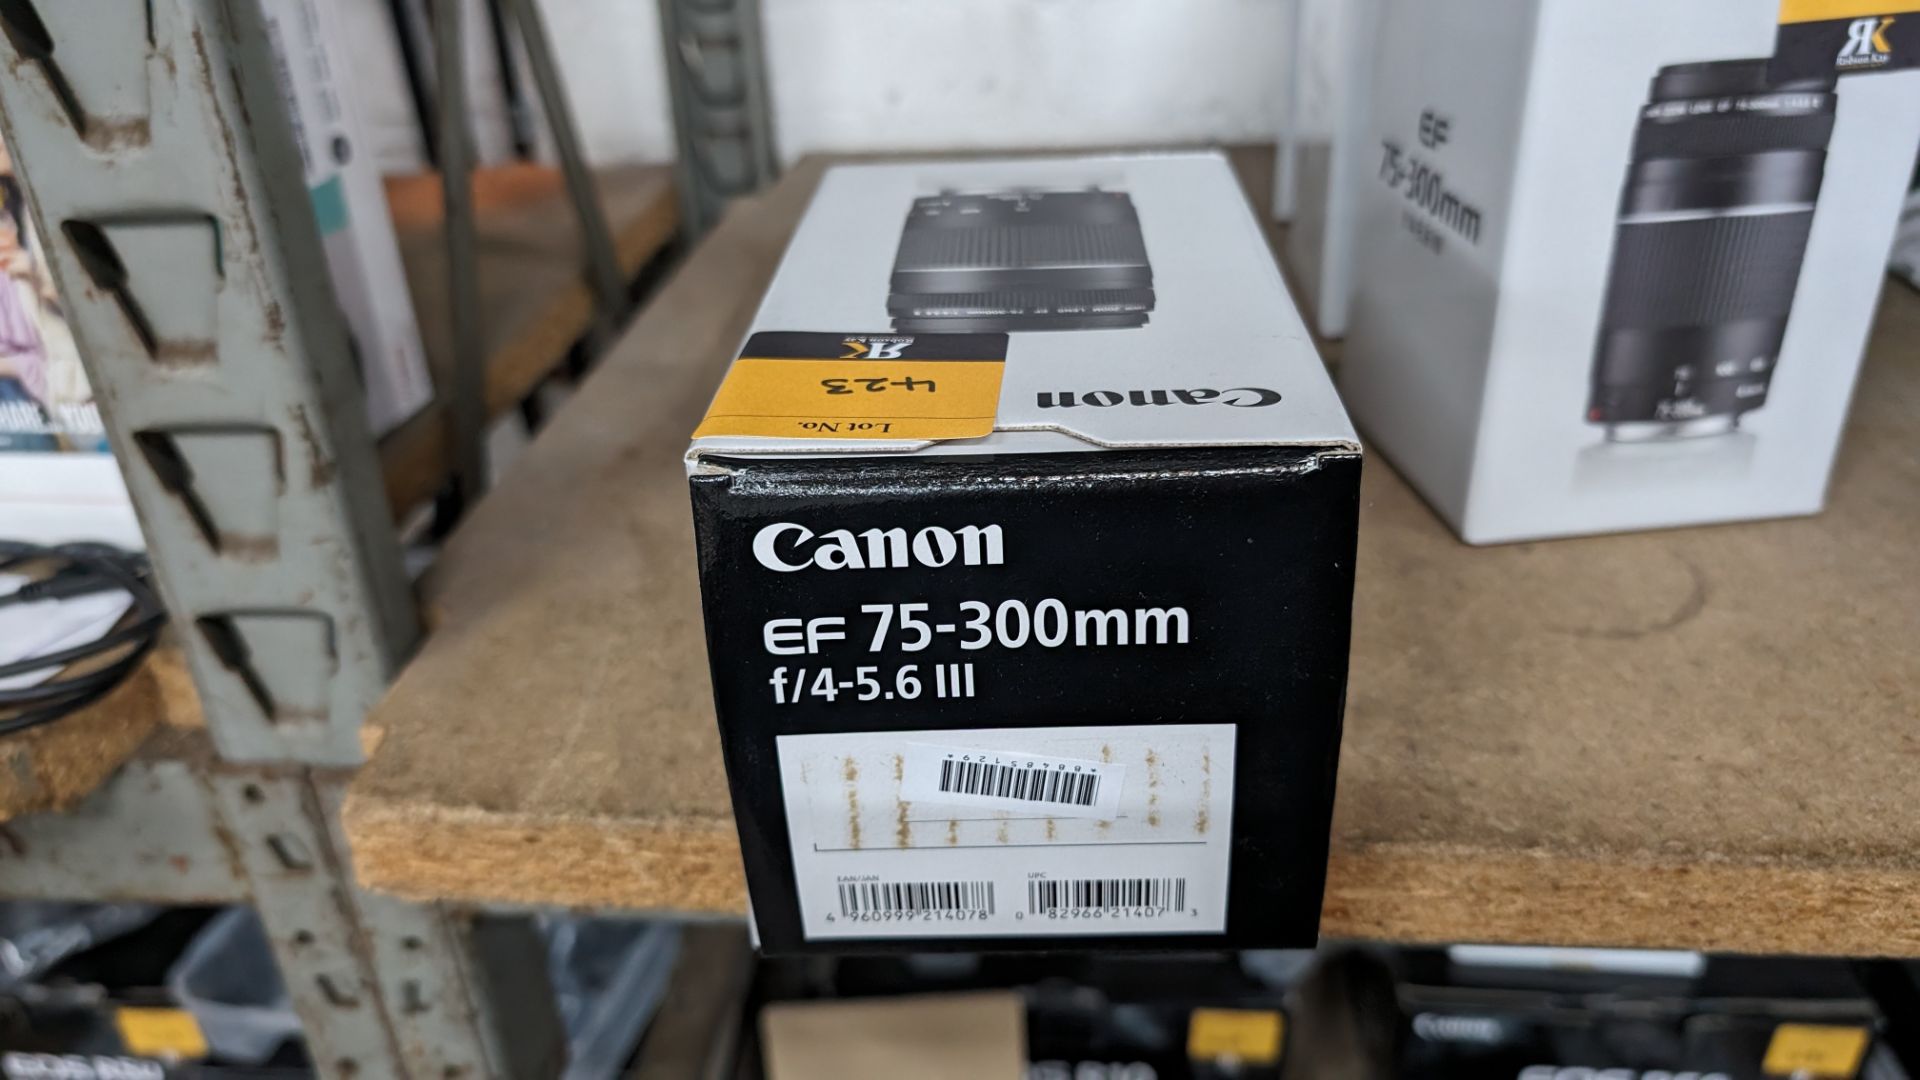 Canon EF 75-300mm lens, f/4-5.6 III - Image 8 of 8